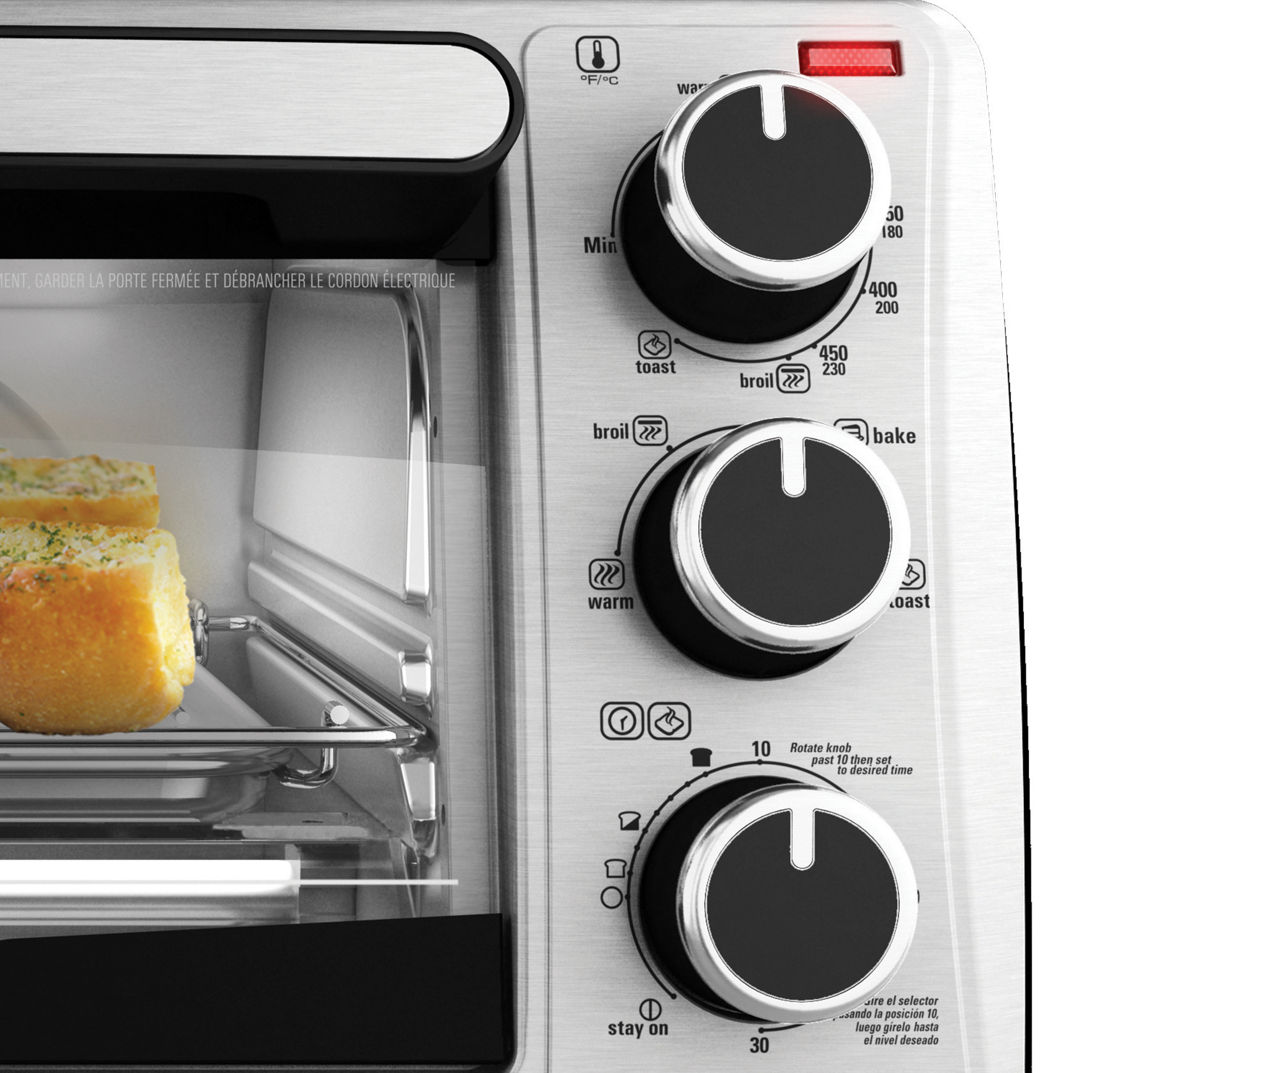 Black & Decker 4-Slice Toaster Oven - Black/Silver for Sale in Las